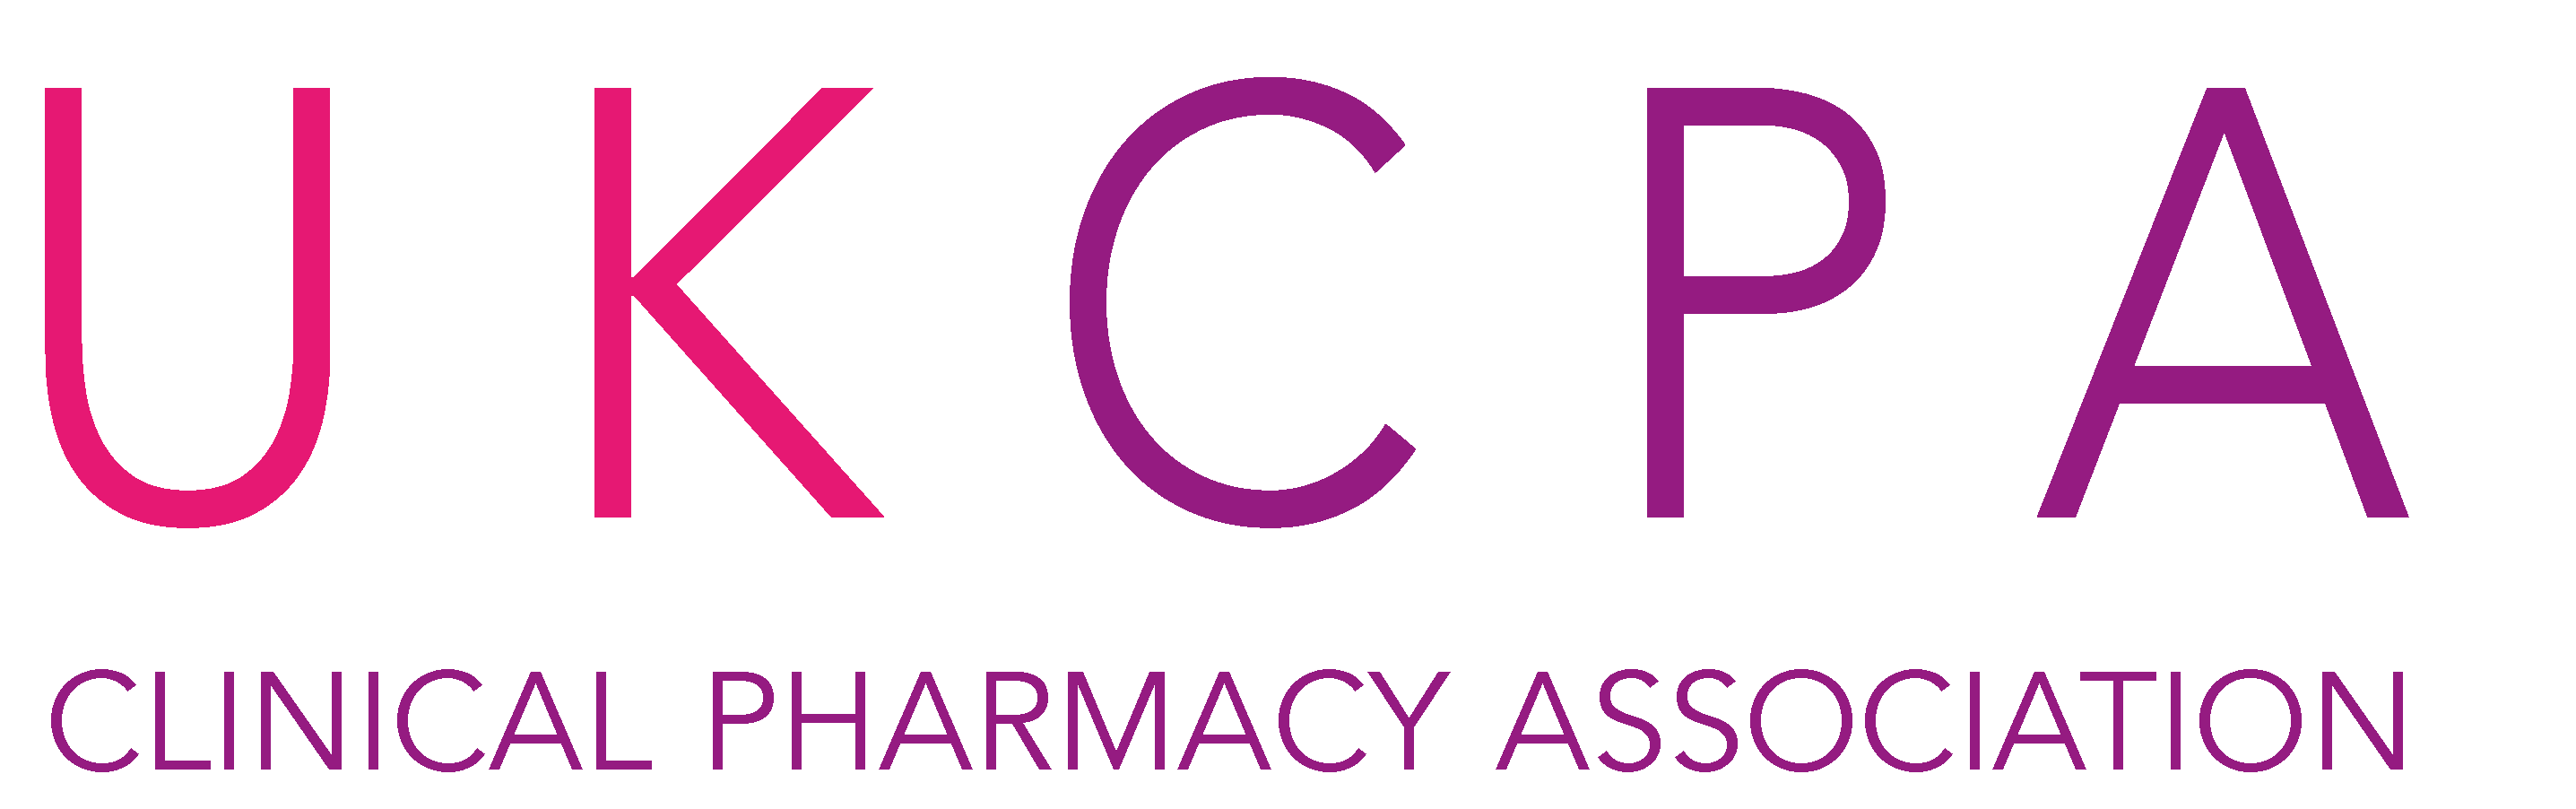 UKCPA_Pink_purpleCMYK_Logo